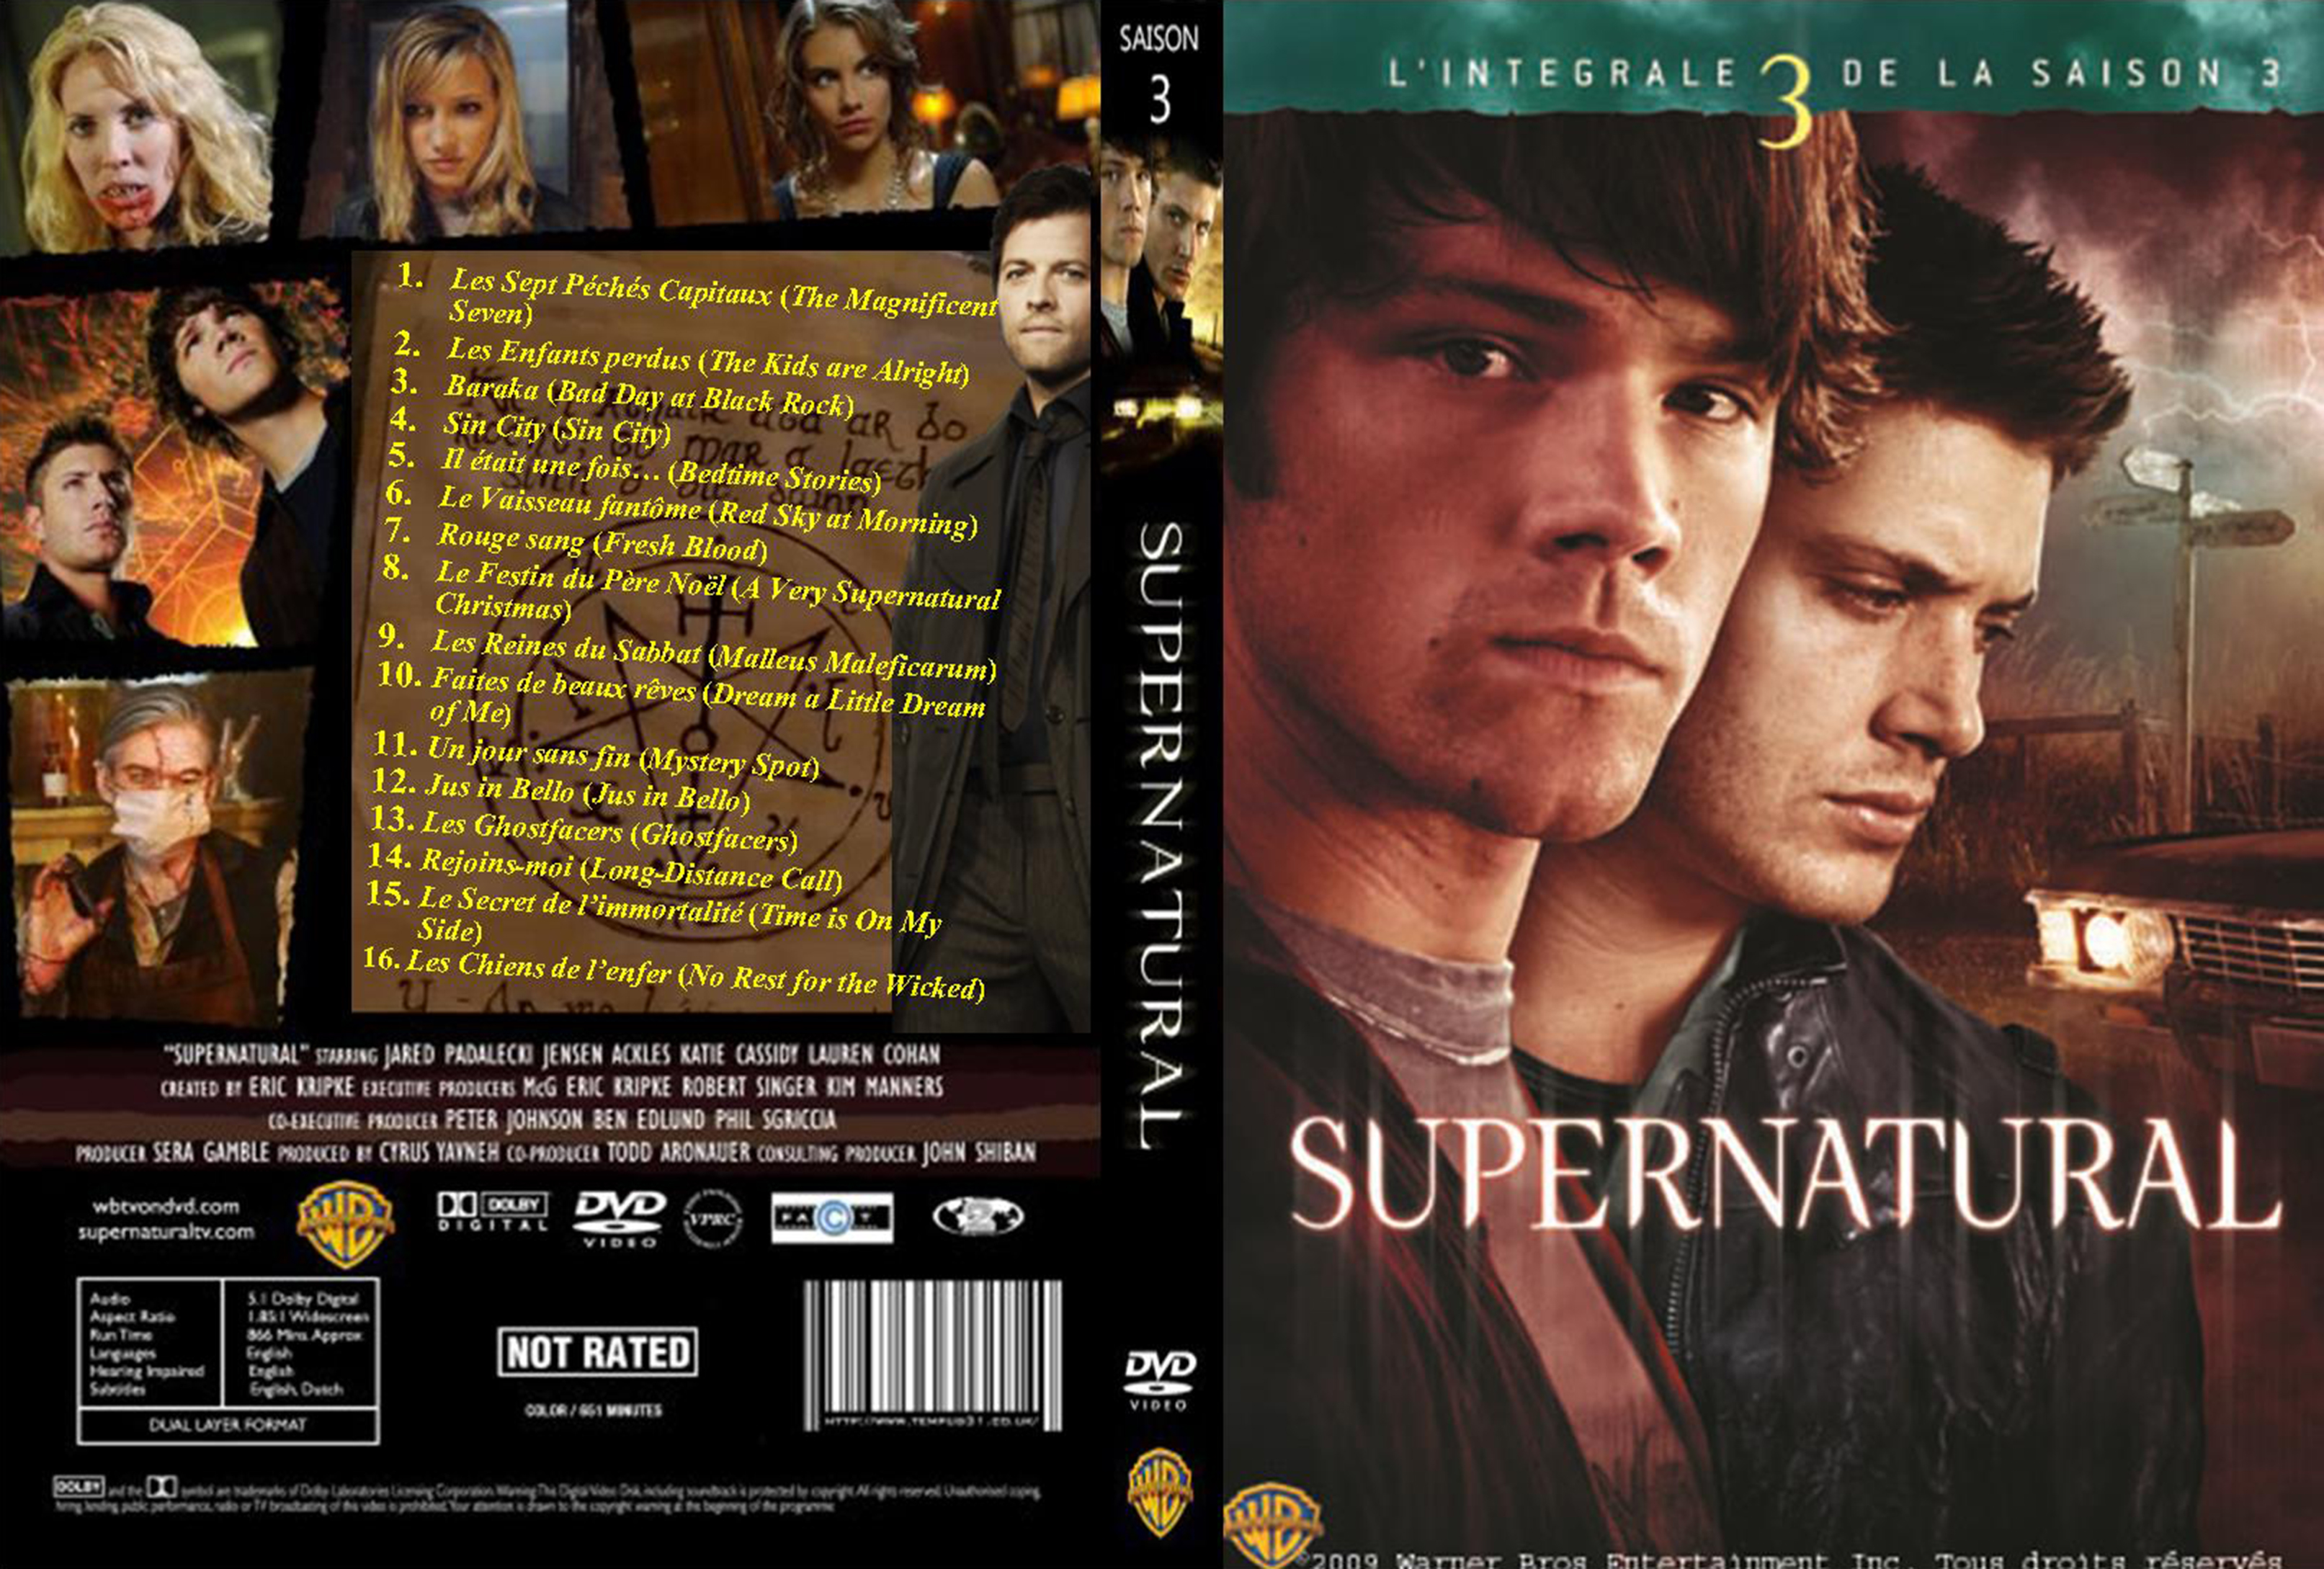 Jaquette DVD Supernatural Saison 3 custom